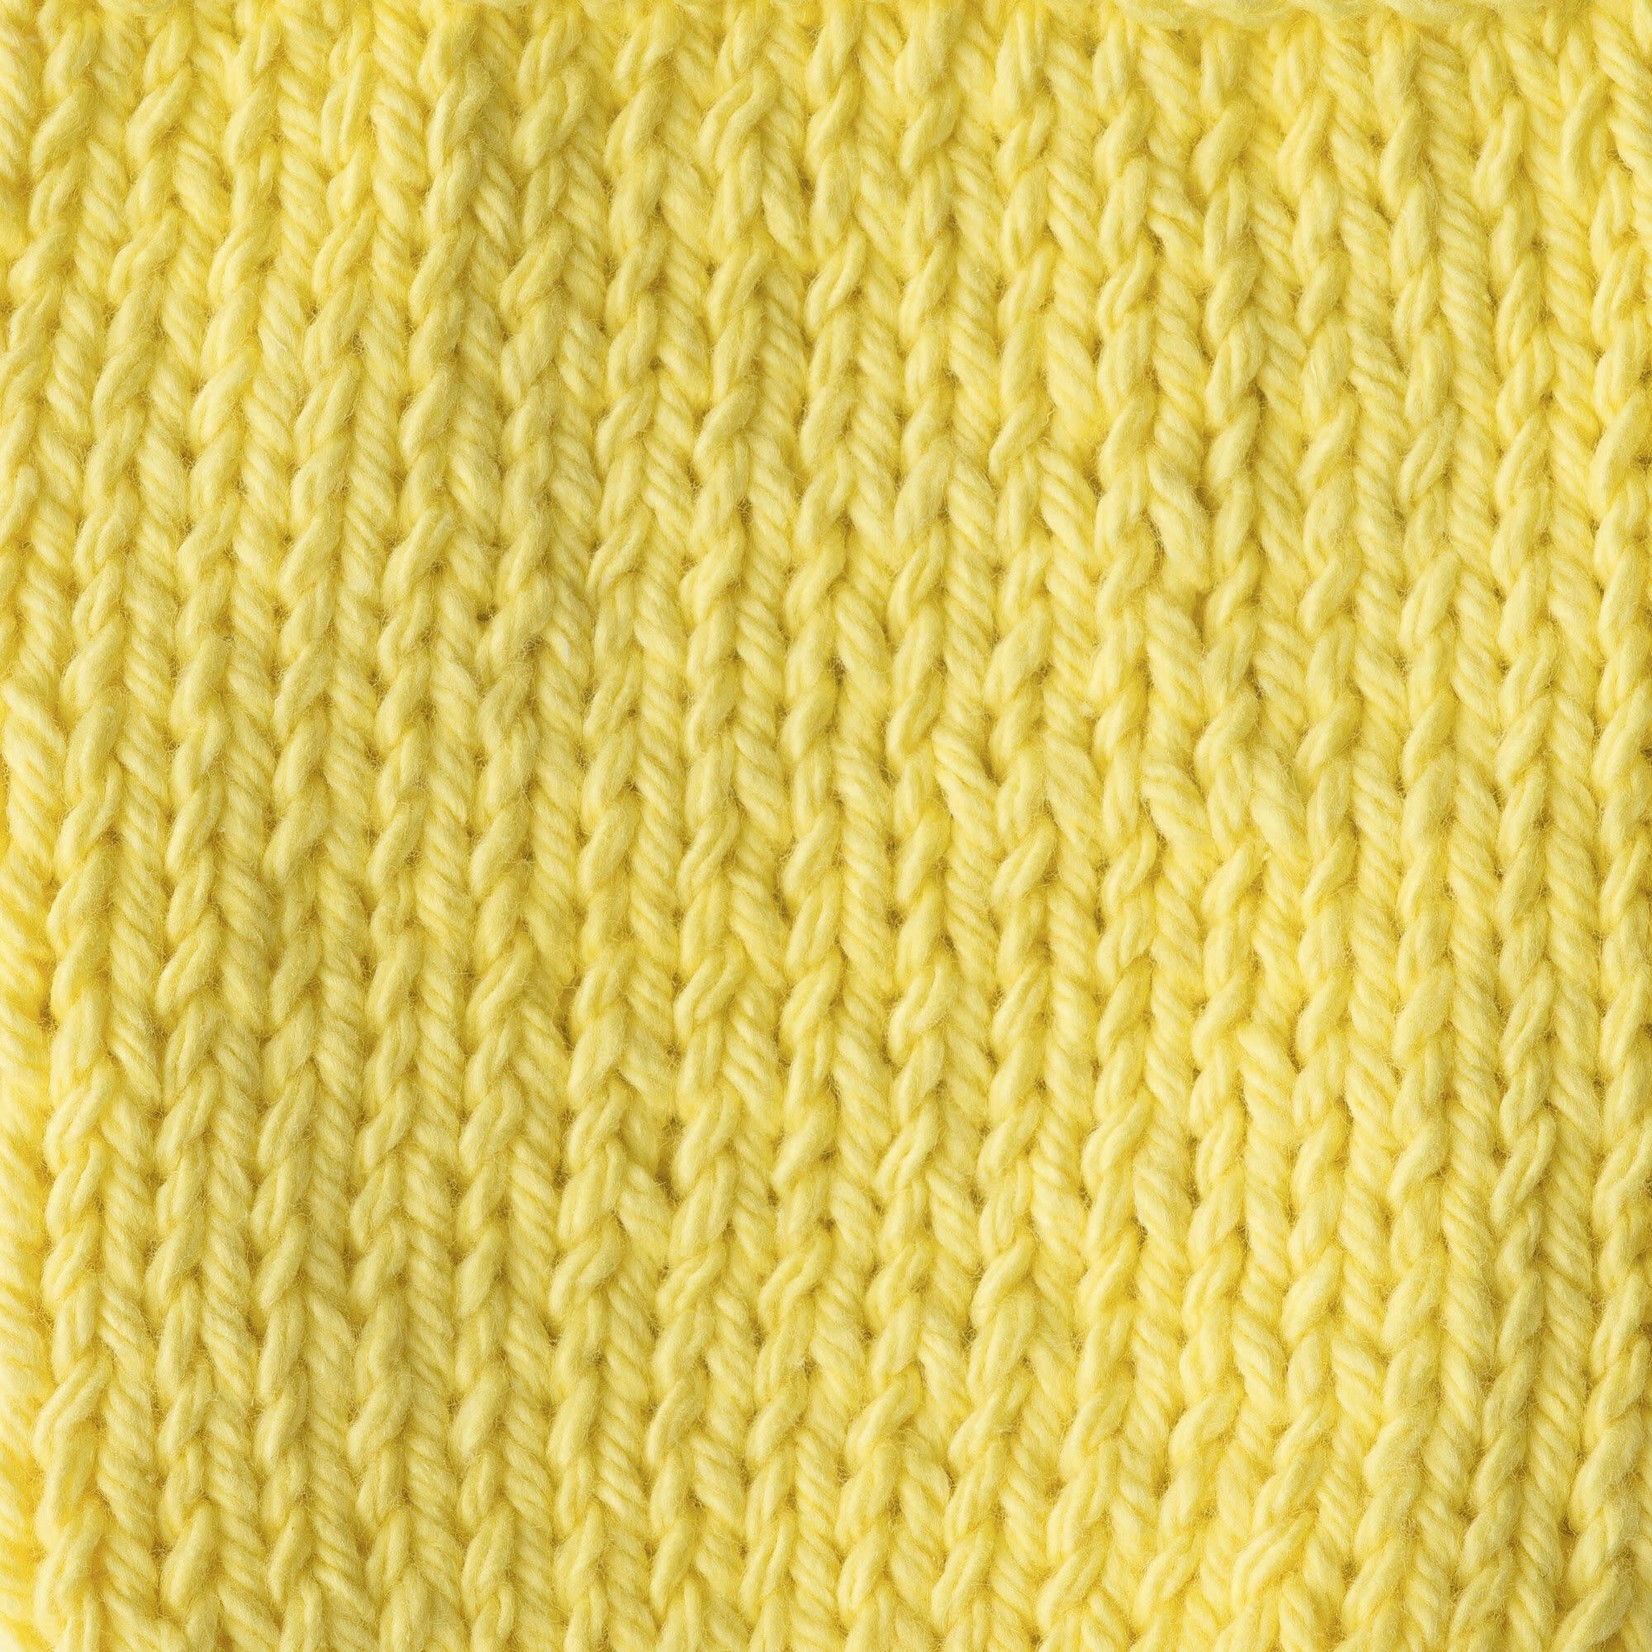 Lily Sugar and Cream Solids, Knitting Yarn & Wool